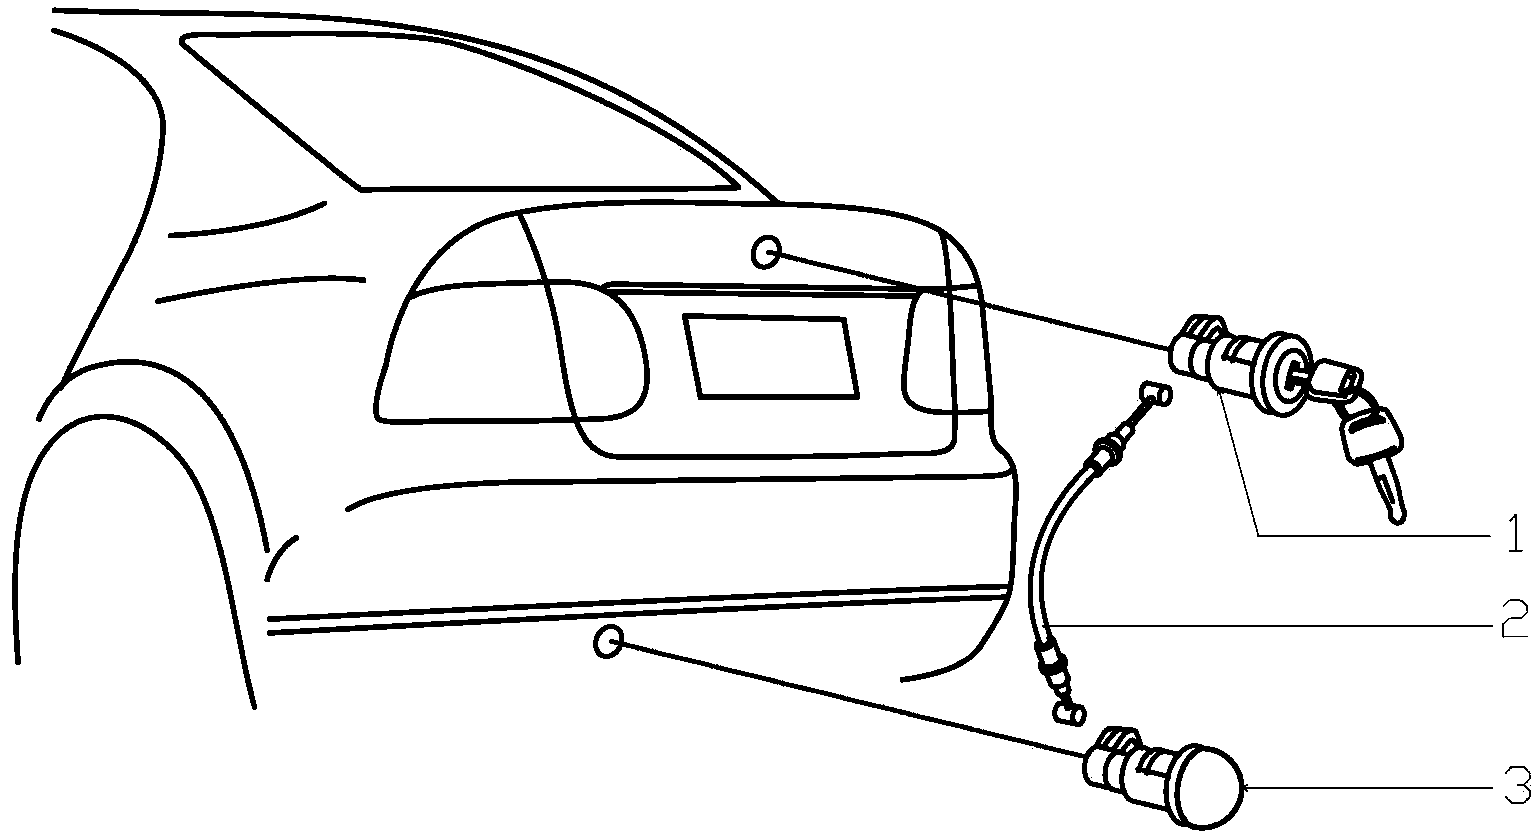 Convenient switch lock of automobile trunk